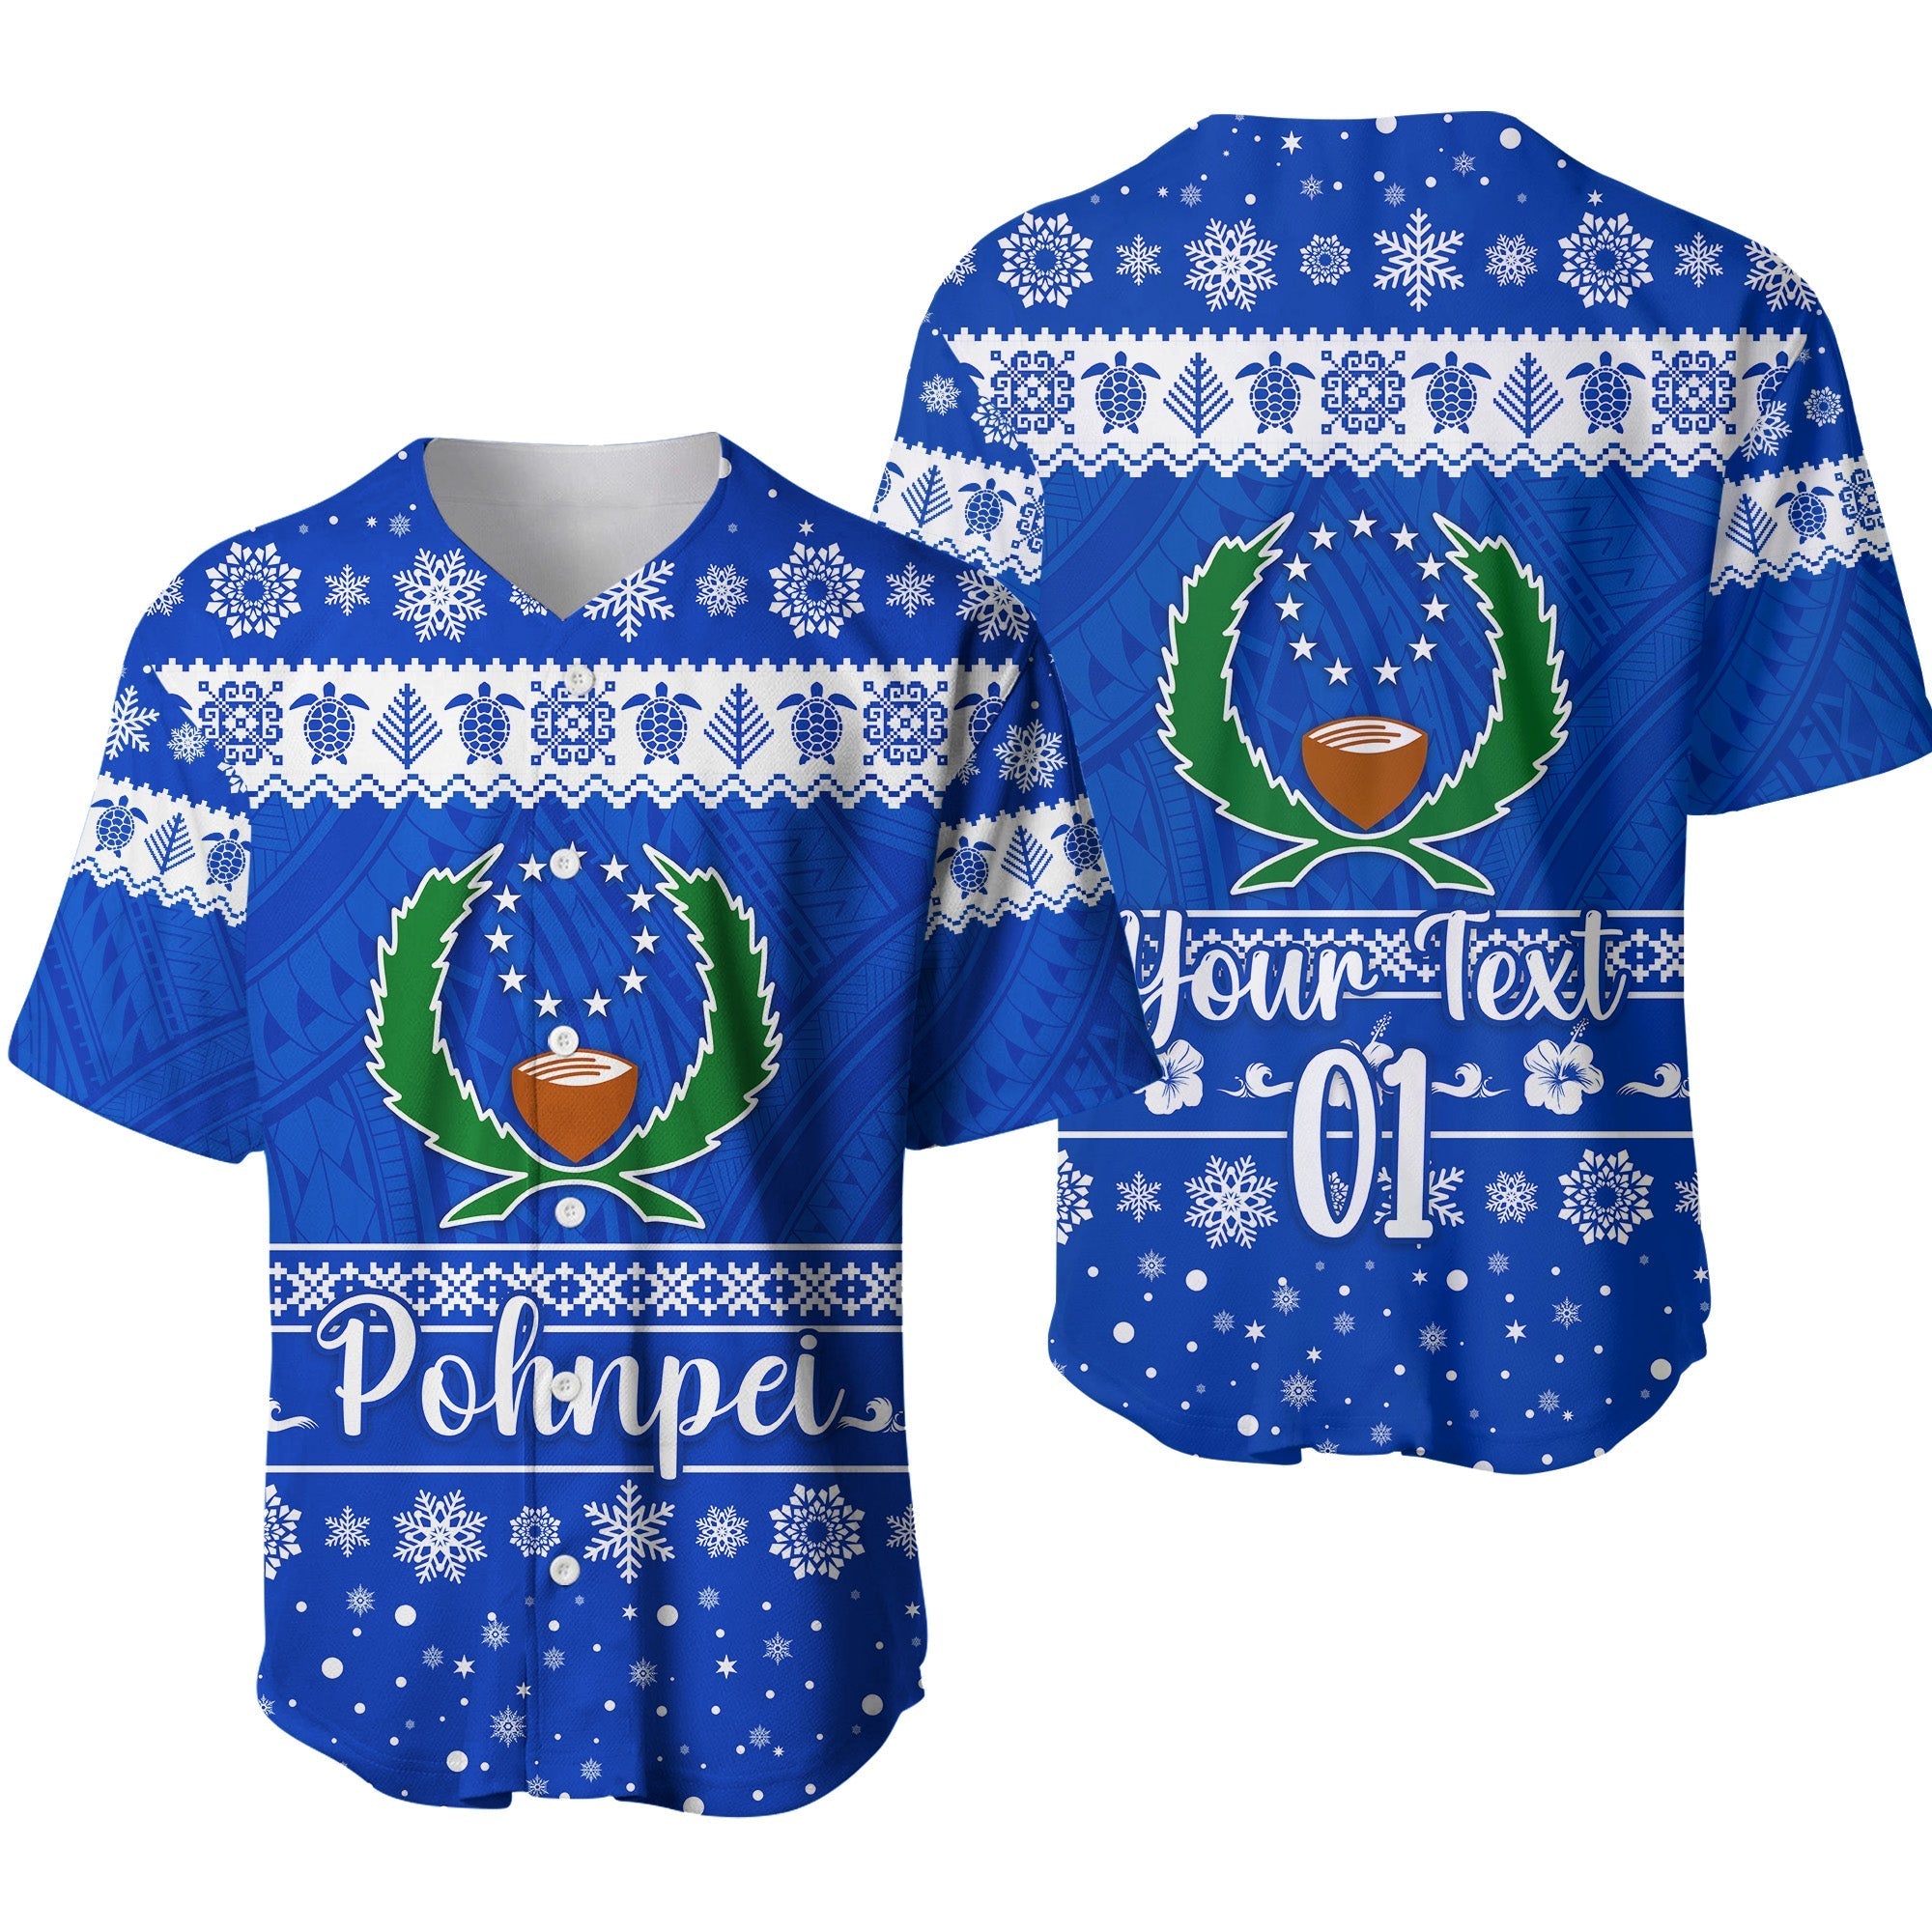 custom-personalised-fsm-pohnpei-christmas-baseball-jersey-simple-style